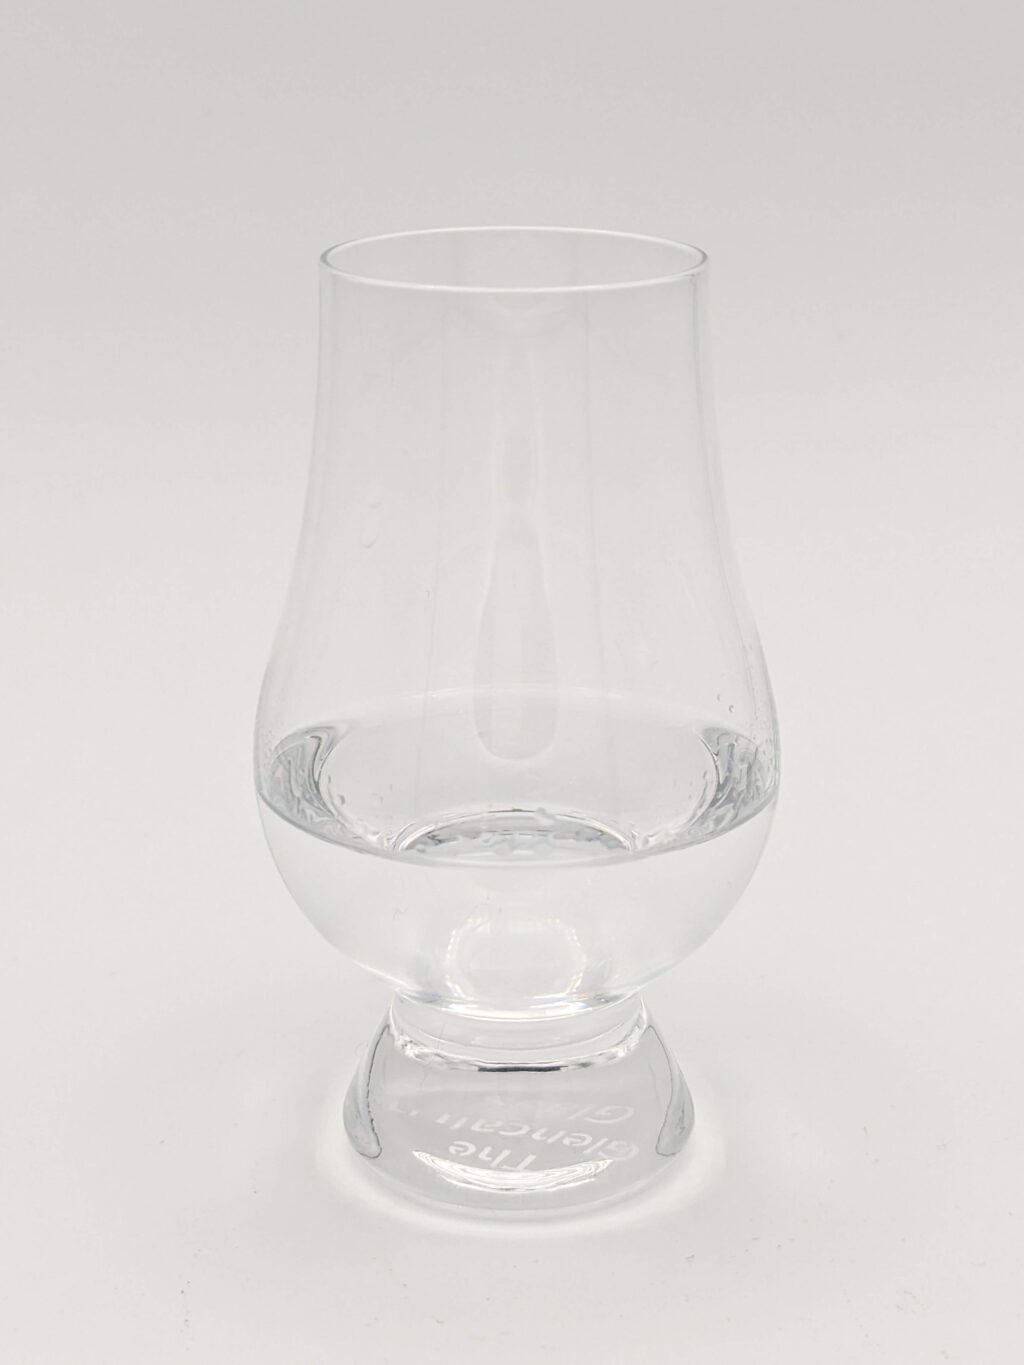 Clear liquid in a glencairn glass